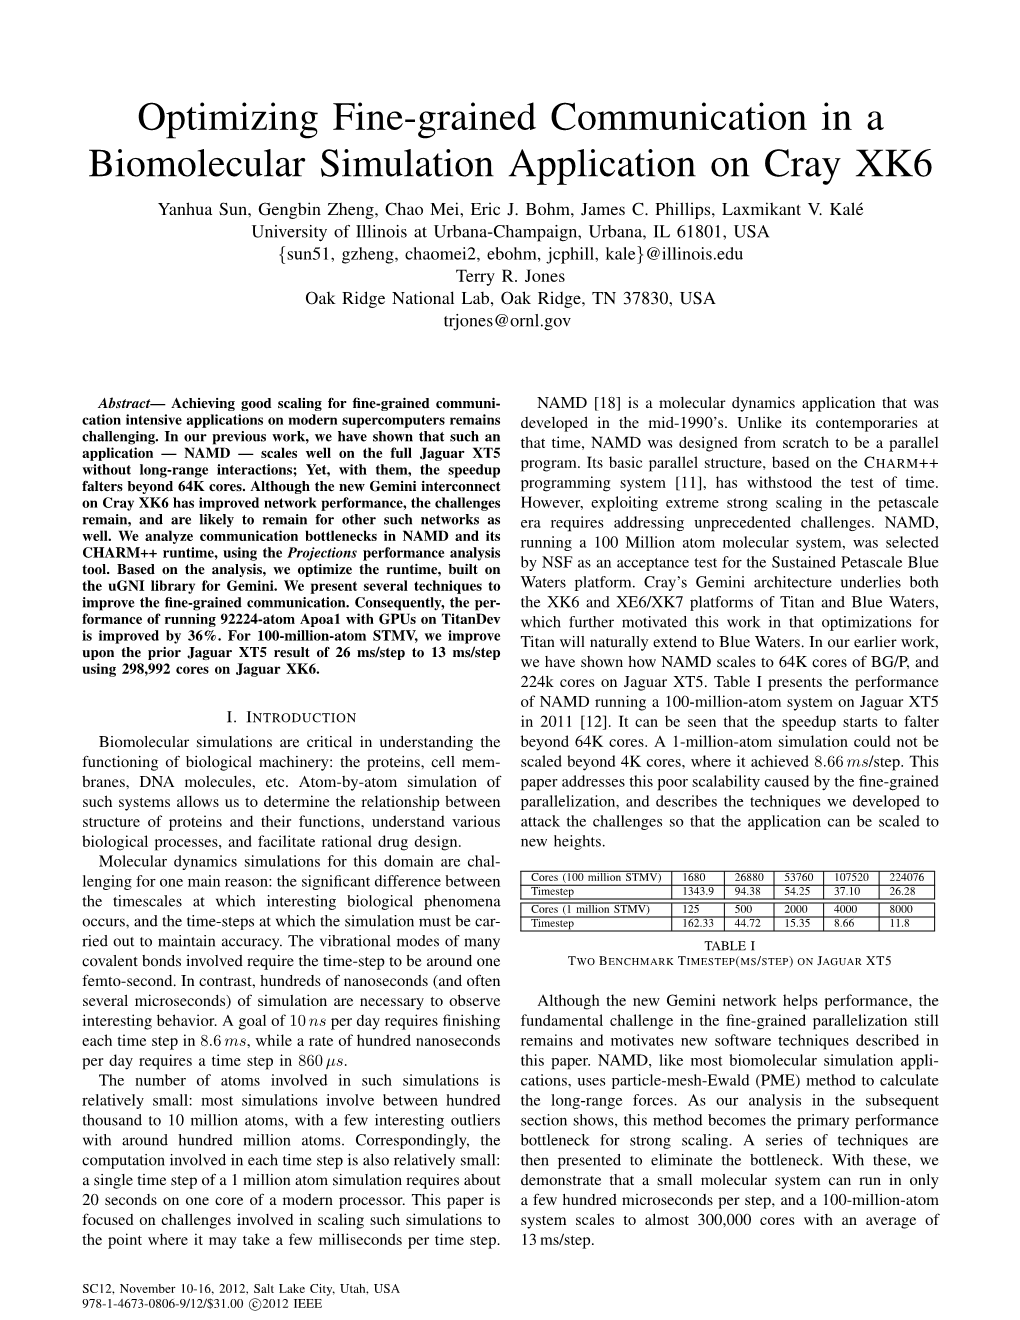 Optimizing Fine-Grained Communication in a Biomolecular Simulation Application on Cray XK6 Yanhua Sun, Gengbin Zheng, Chao Mei, Eric J